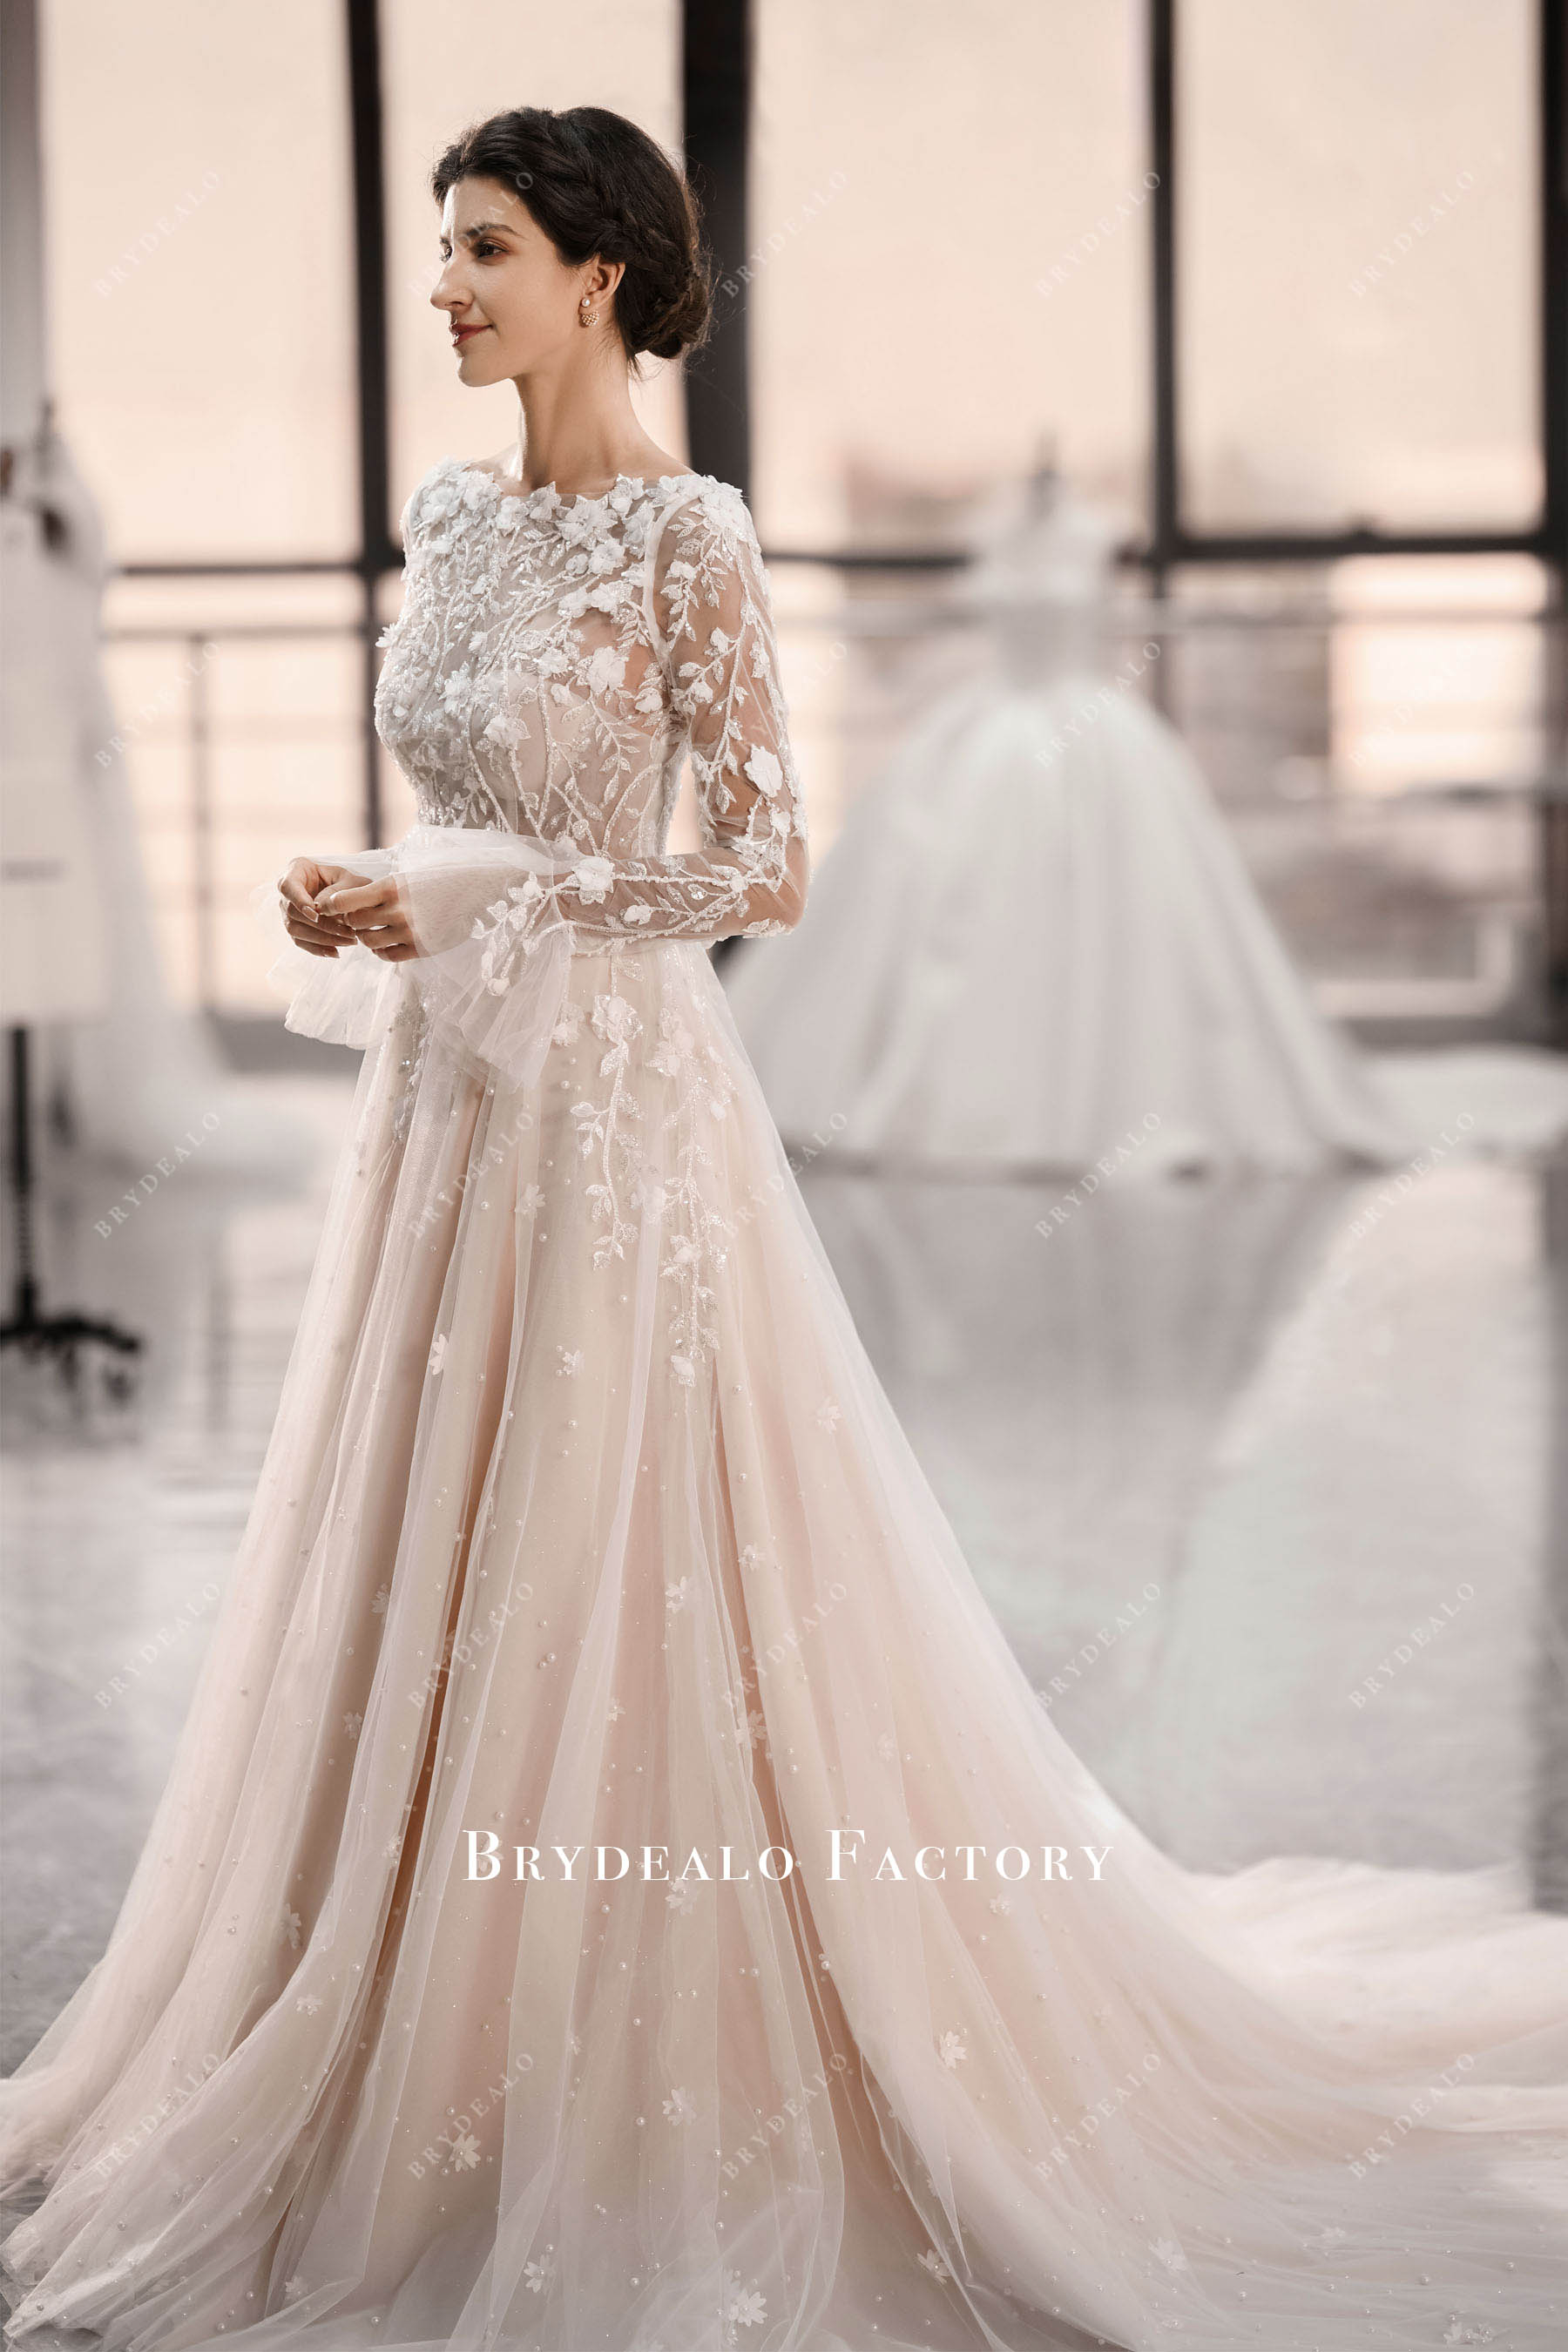 3D flower pearl wedding dress